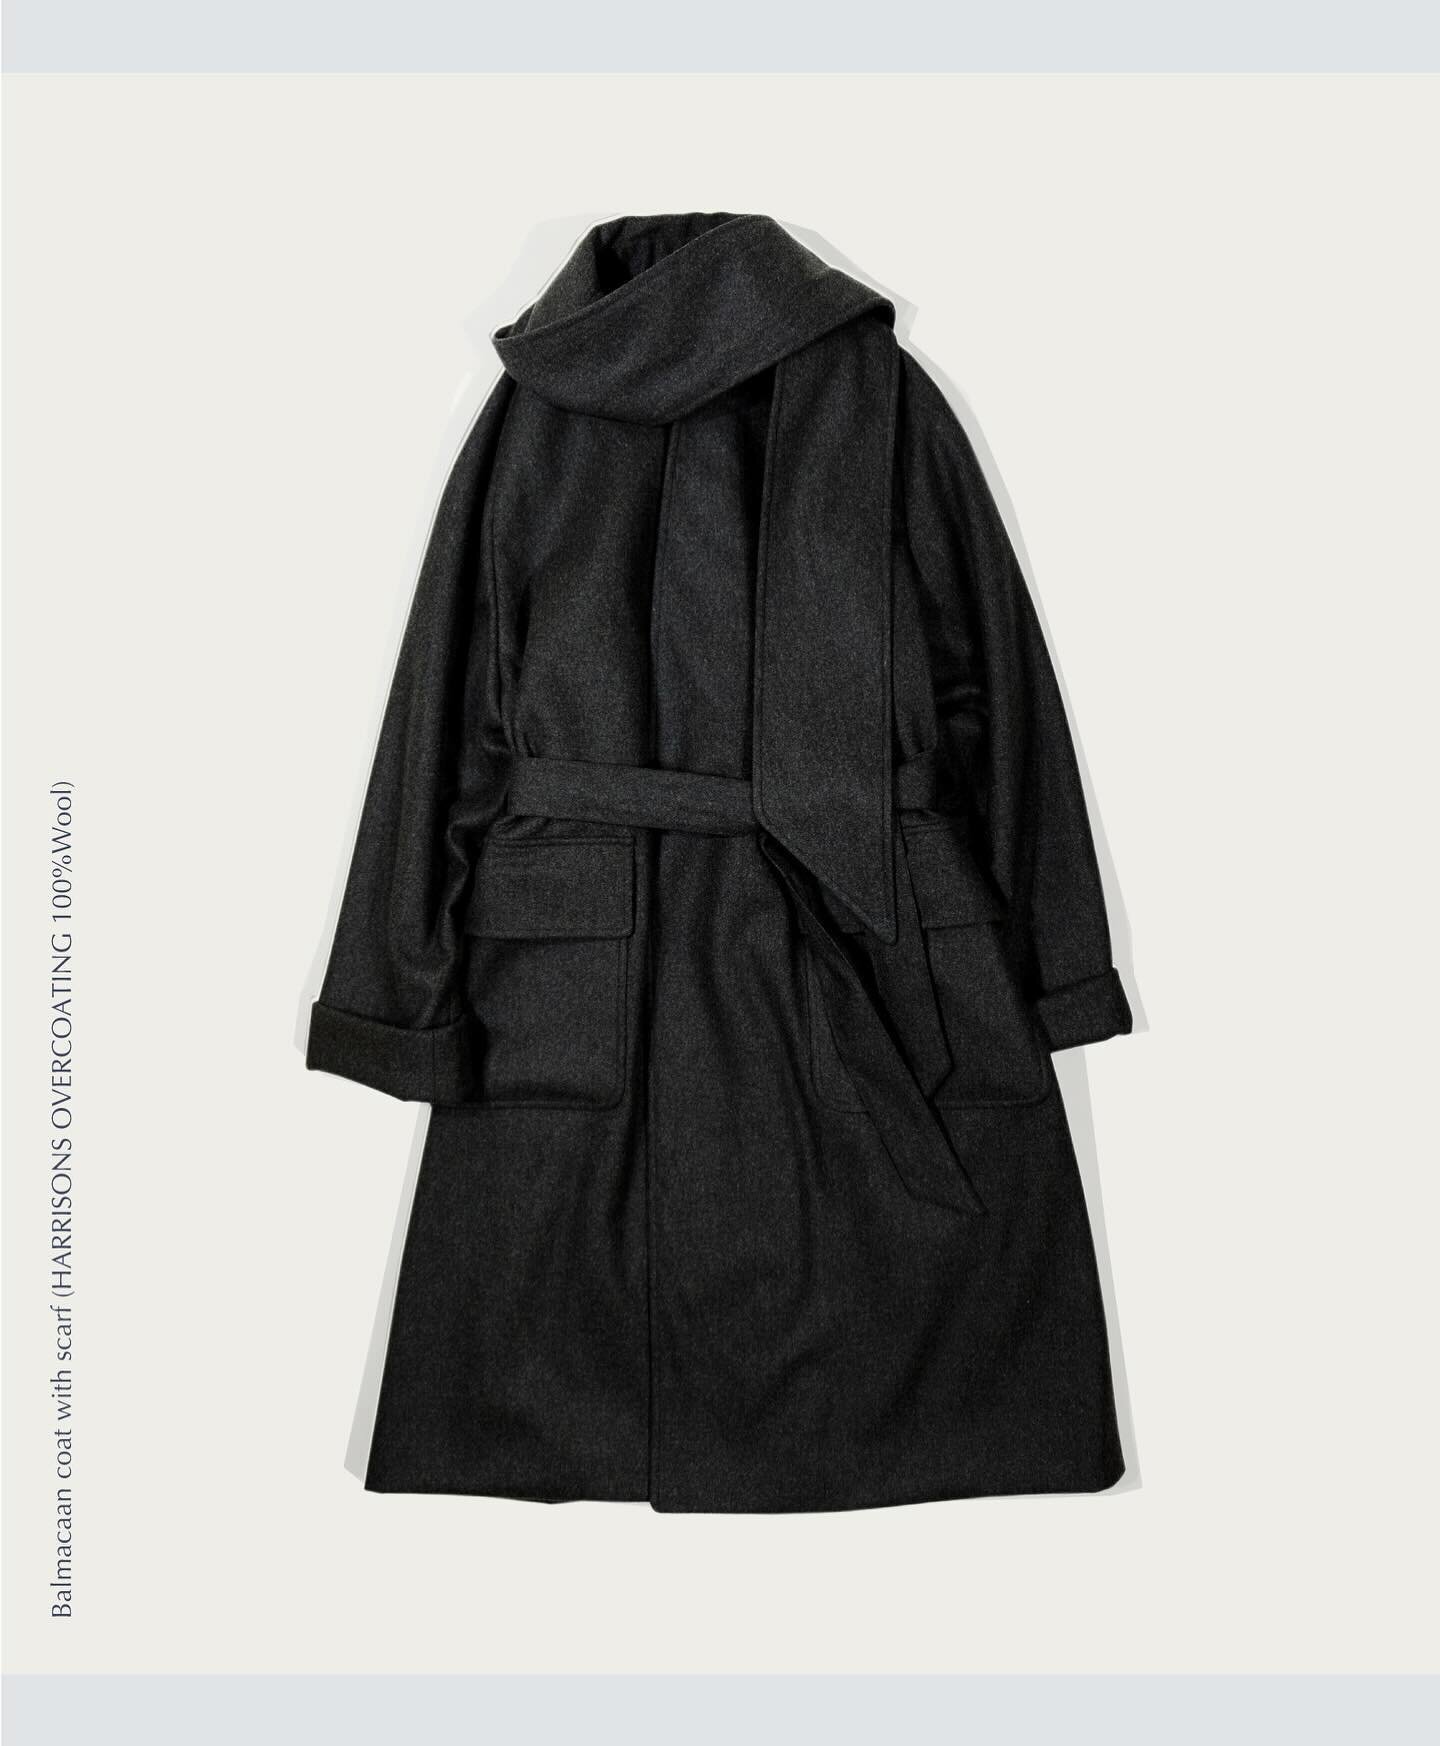 Balmacaan coat with scarf#yasutokimura #harrisons1863 #madetoorder #tailormade #unisexclothing #overcoat